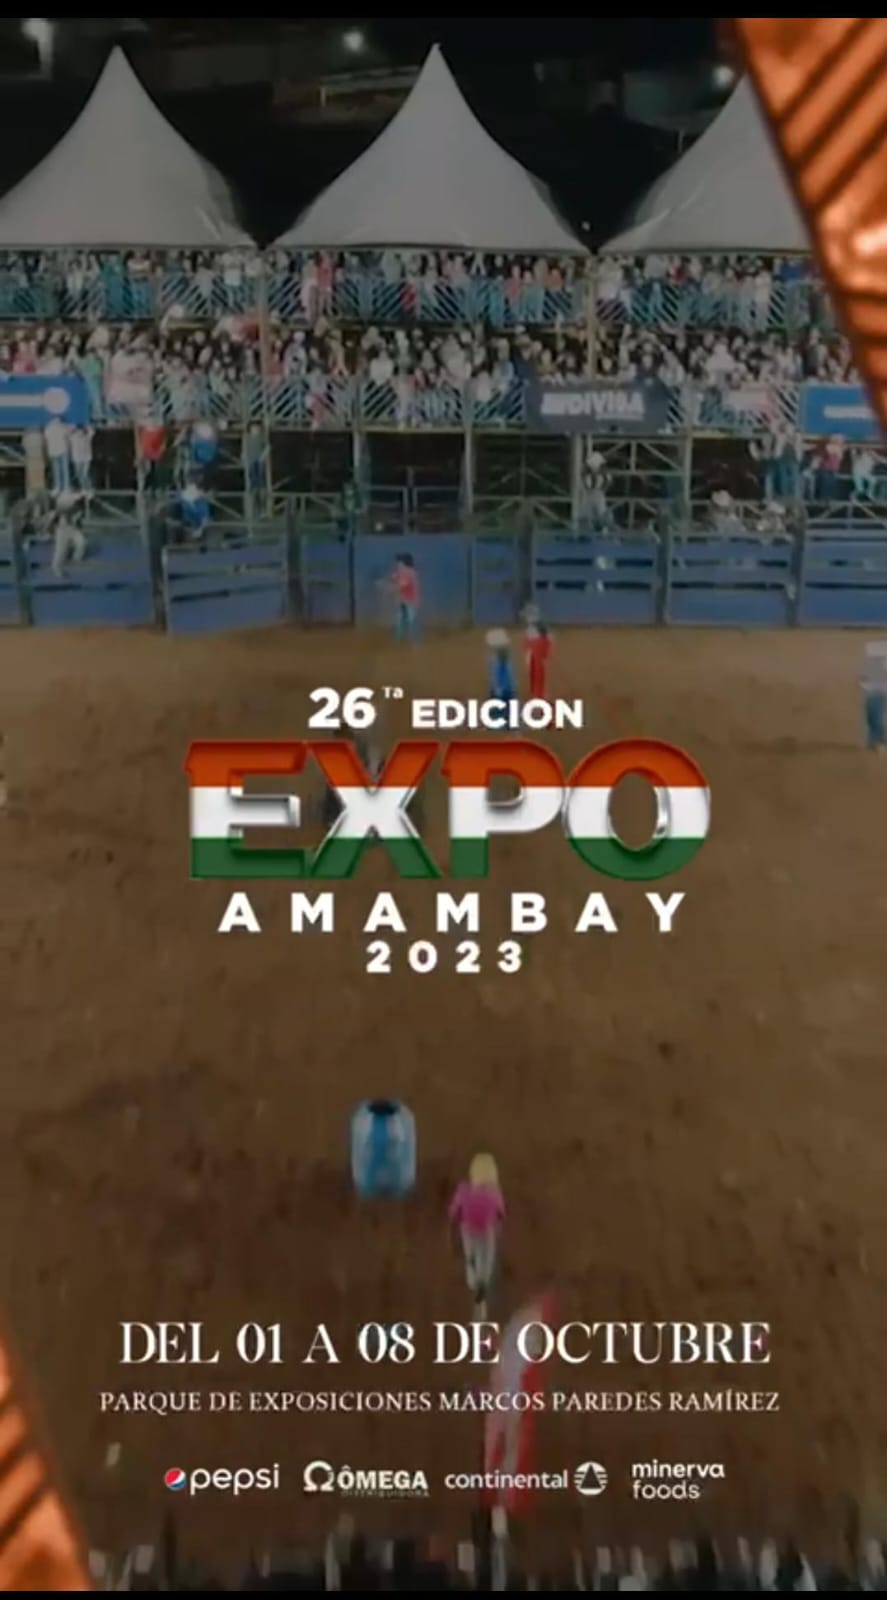 Se lanzó oficialmente la Expo Amambay 2023